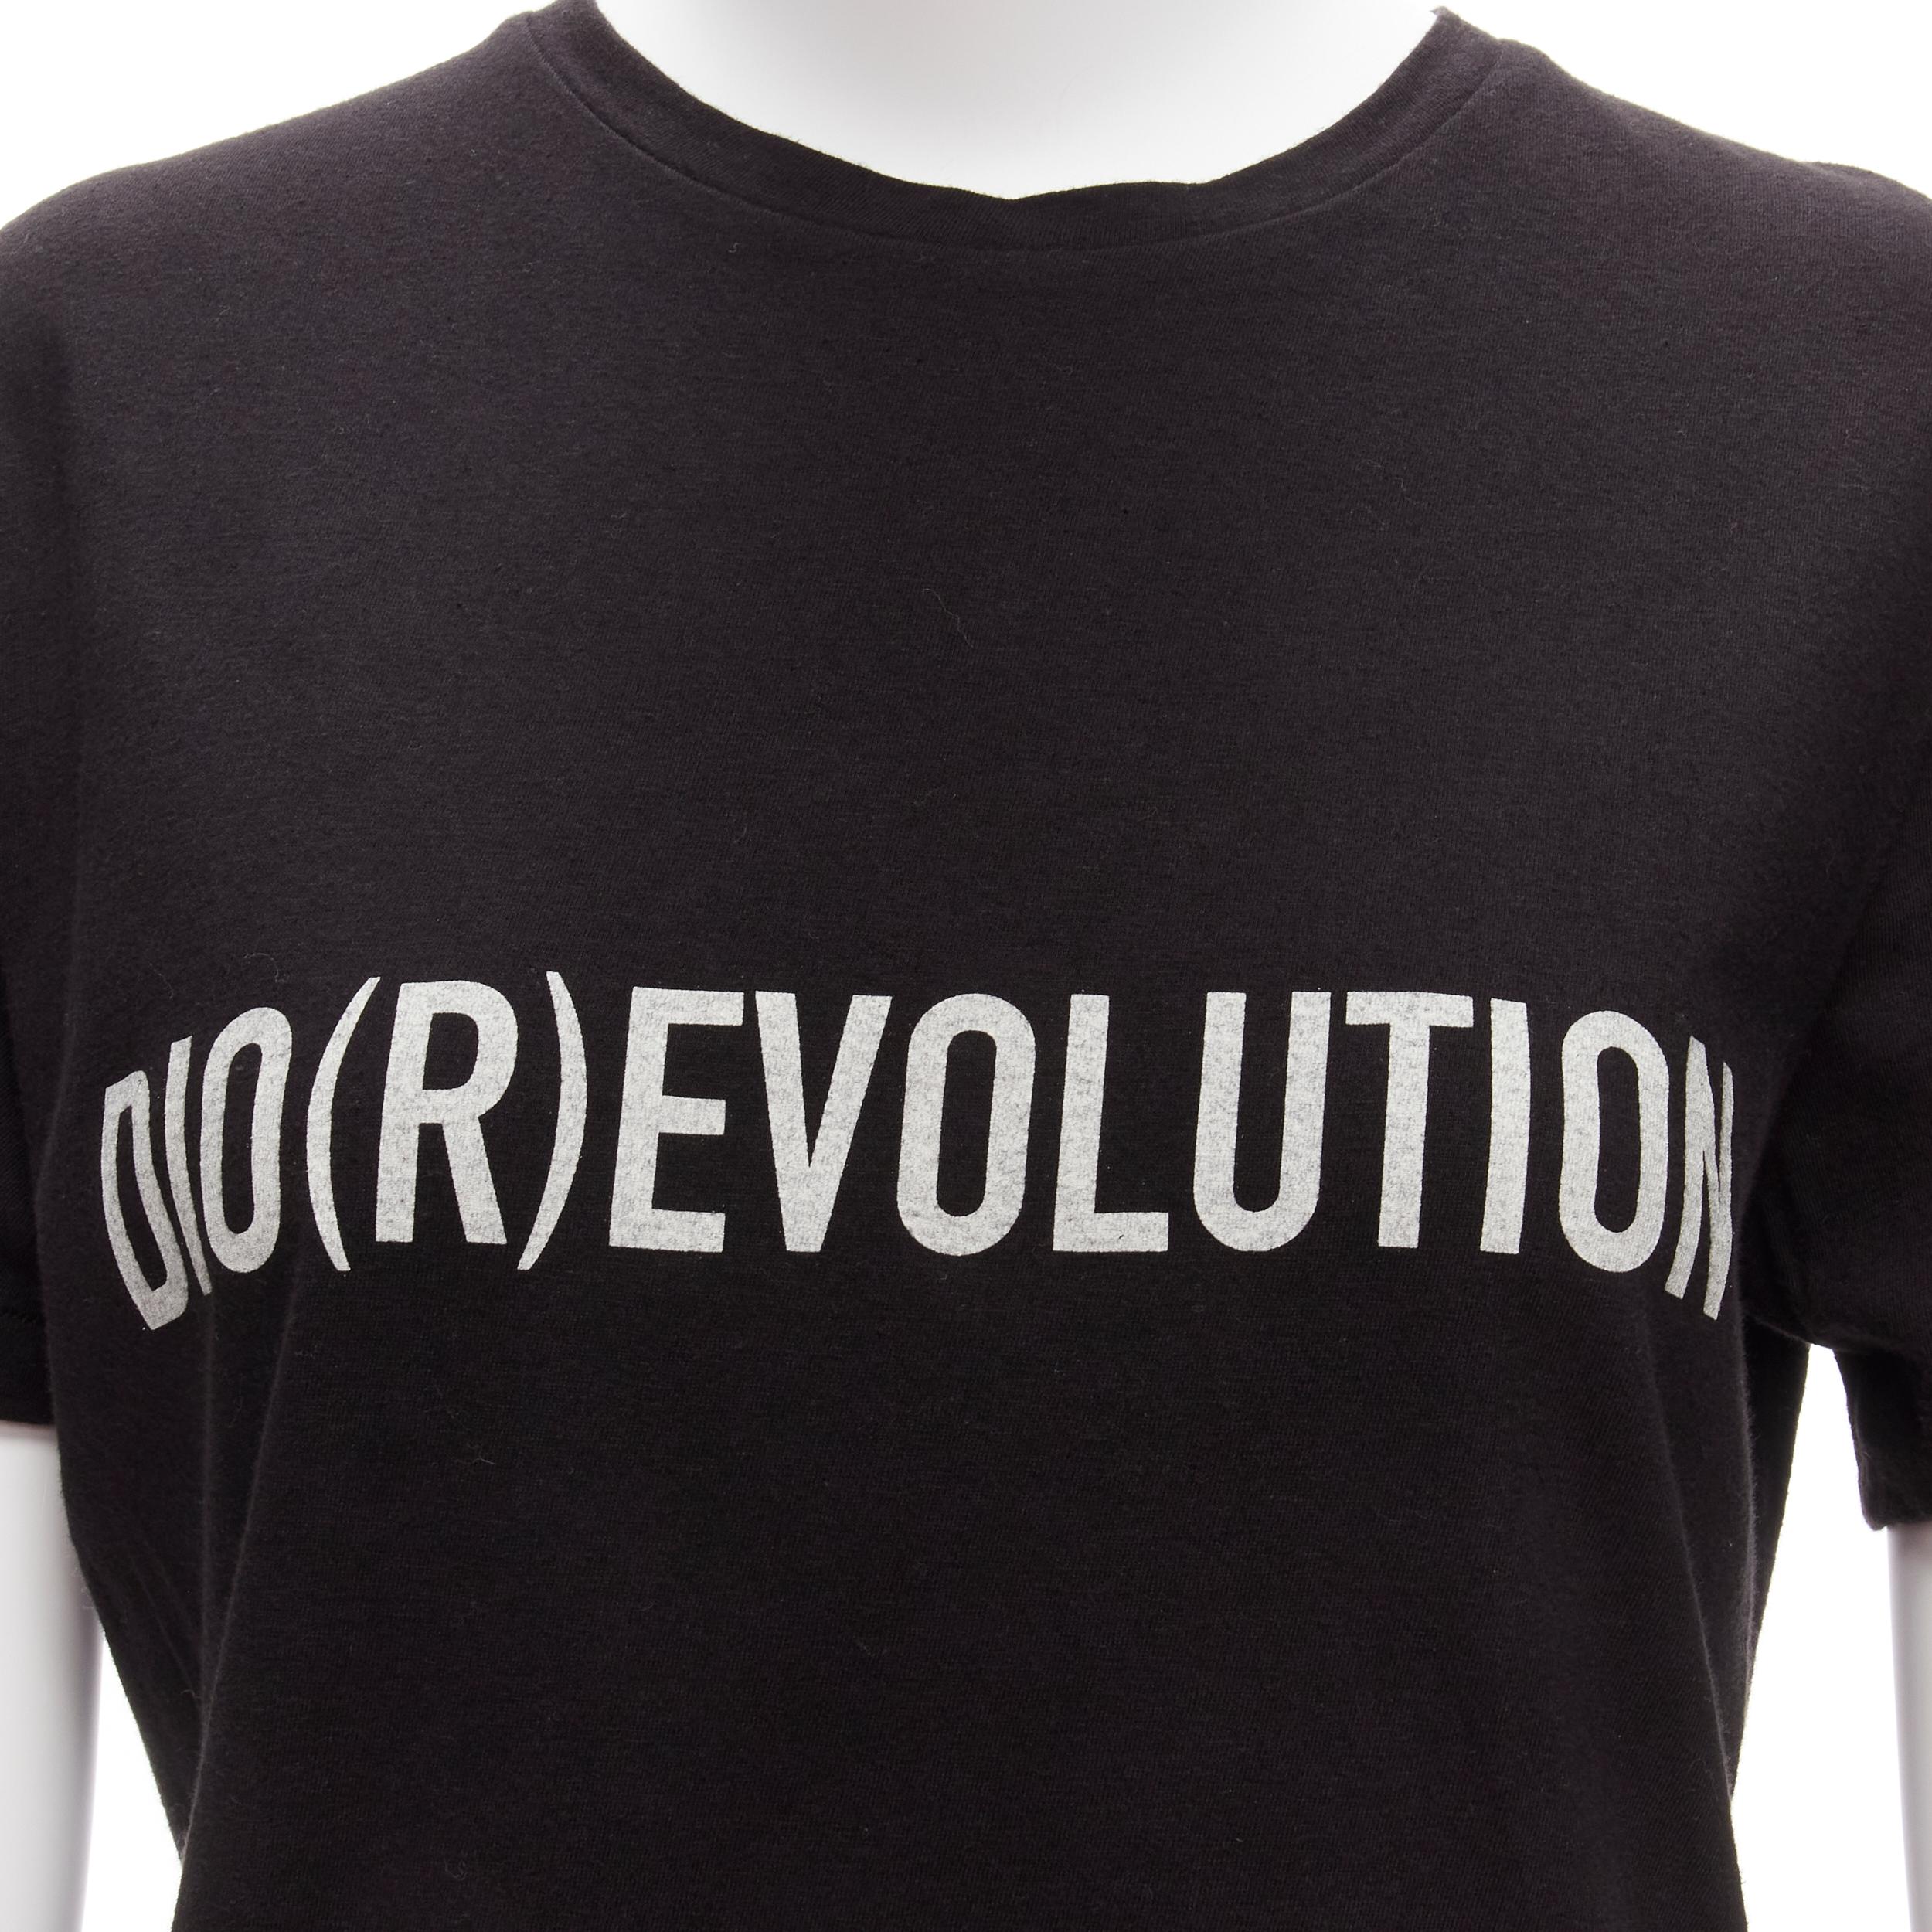 CHRISTIAN DIOR Diorevolution black cotton linen logo print tshirt M For Sale 2